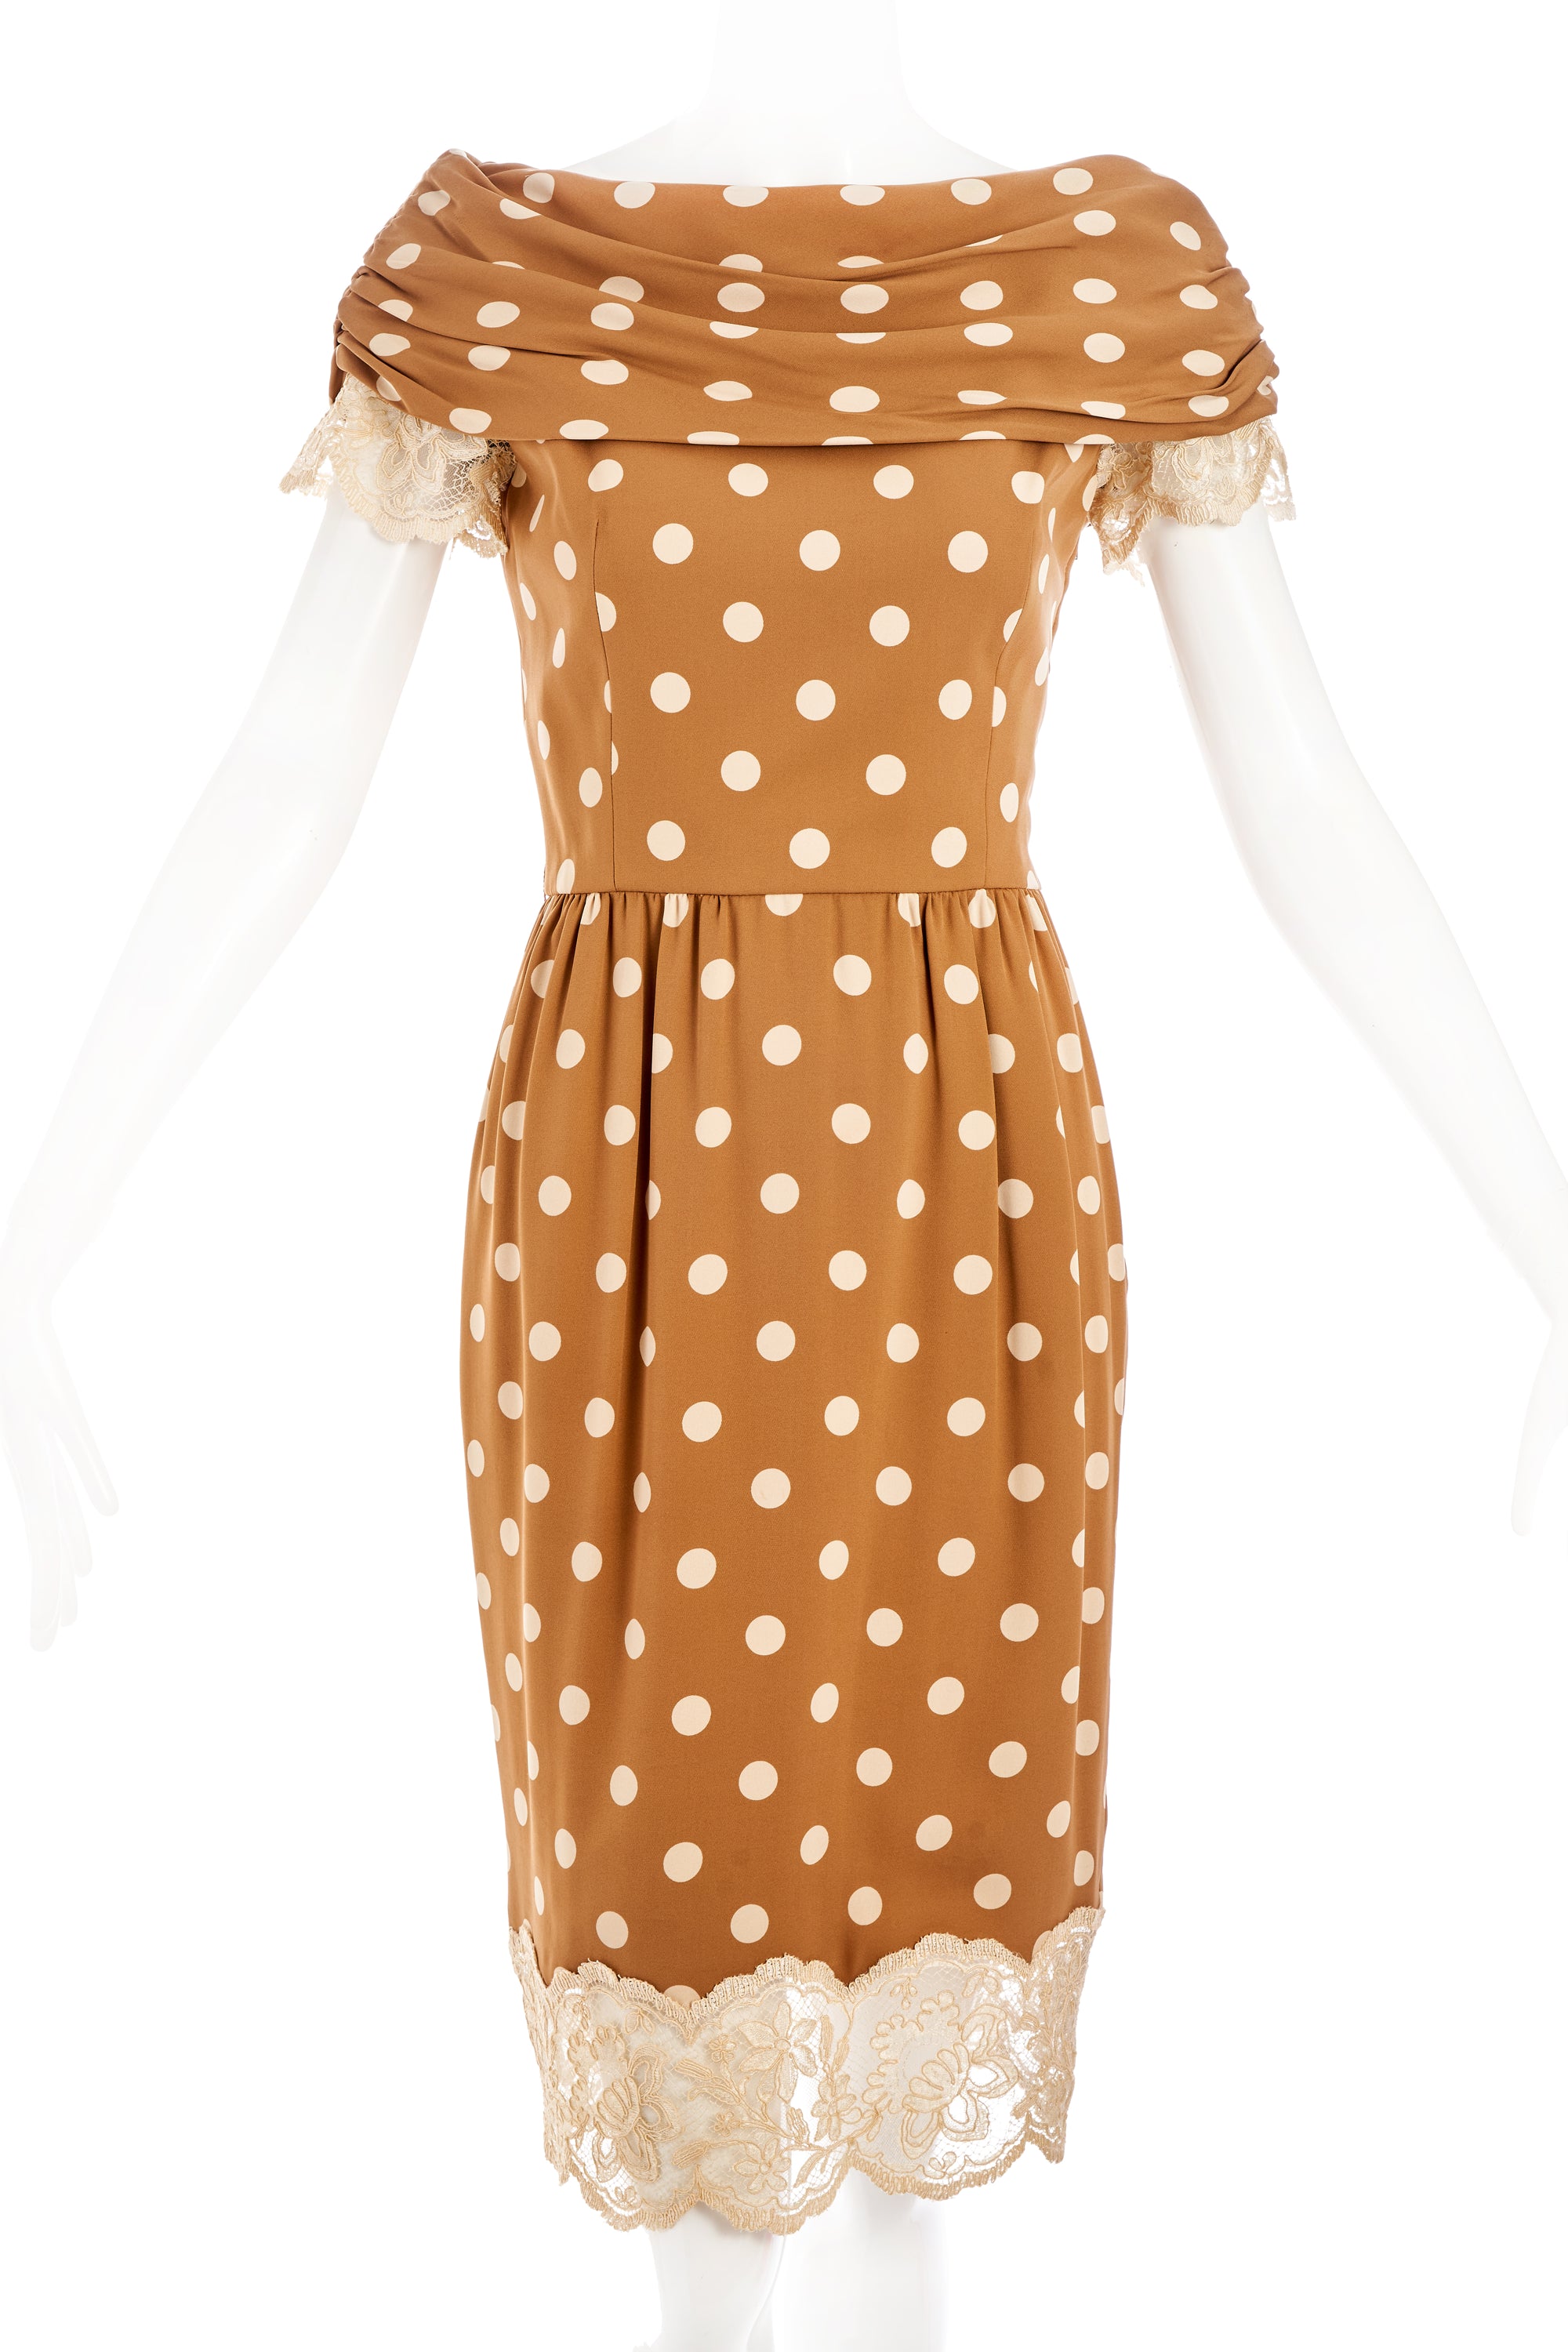 Valentino Brown and Cream Polka Dot Lace trim Dress